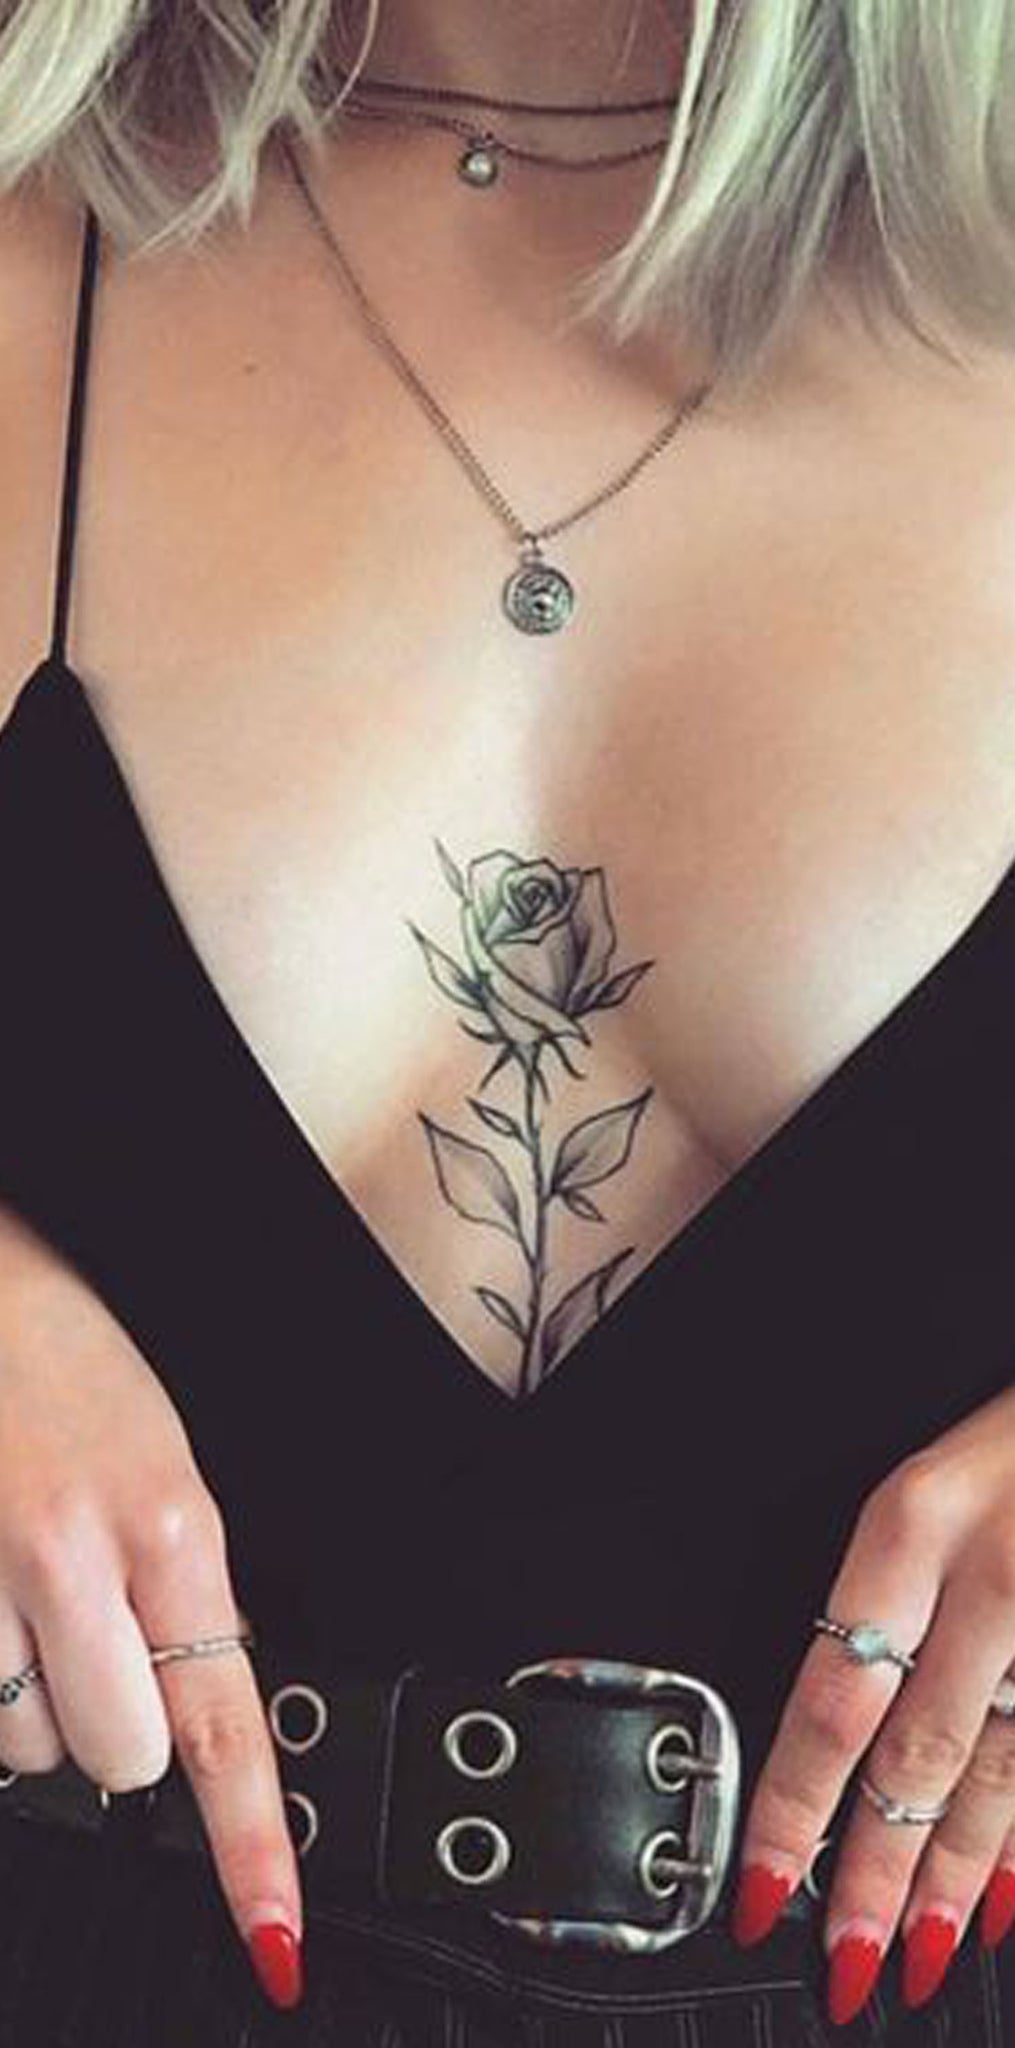 Simple Rose Sternum Tattoo Ideas for Women - Delicate Black Floral Flower Chest Tat -  ideas de tatuaje de esternón rosa para mujeres - www.MyBodiArt.com #tattoos